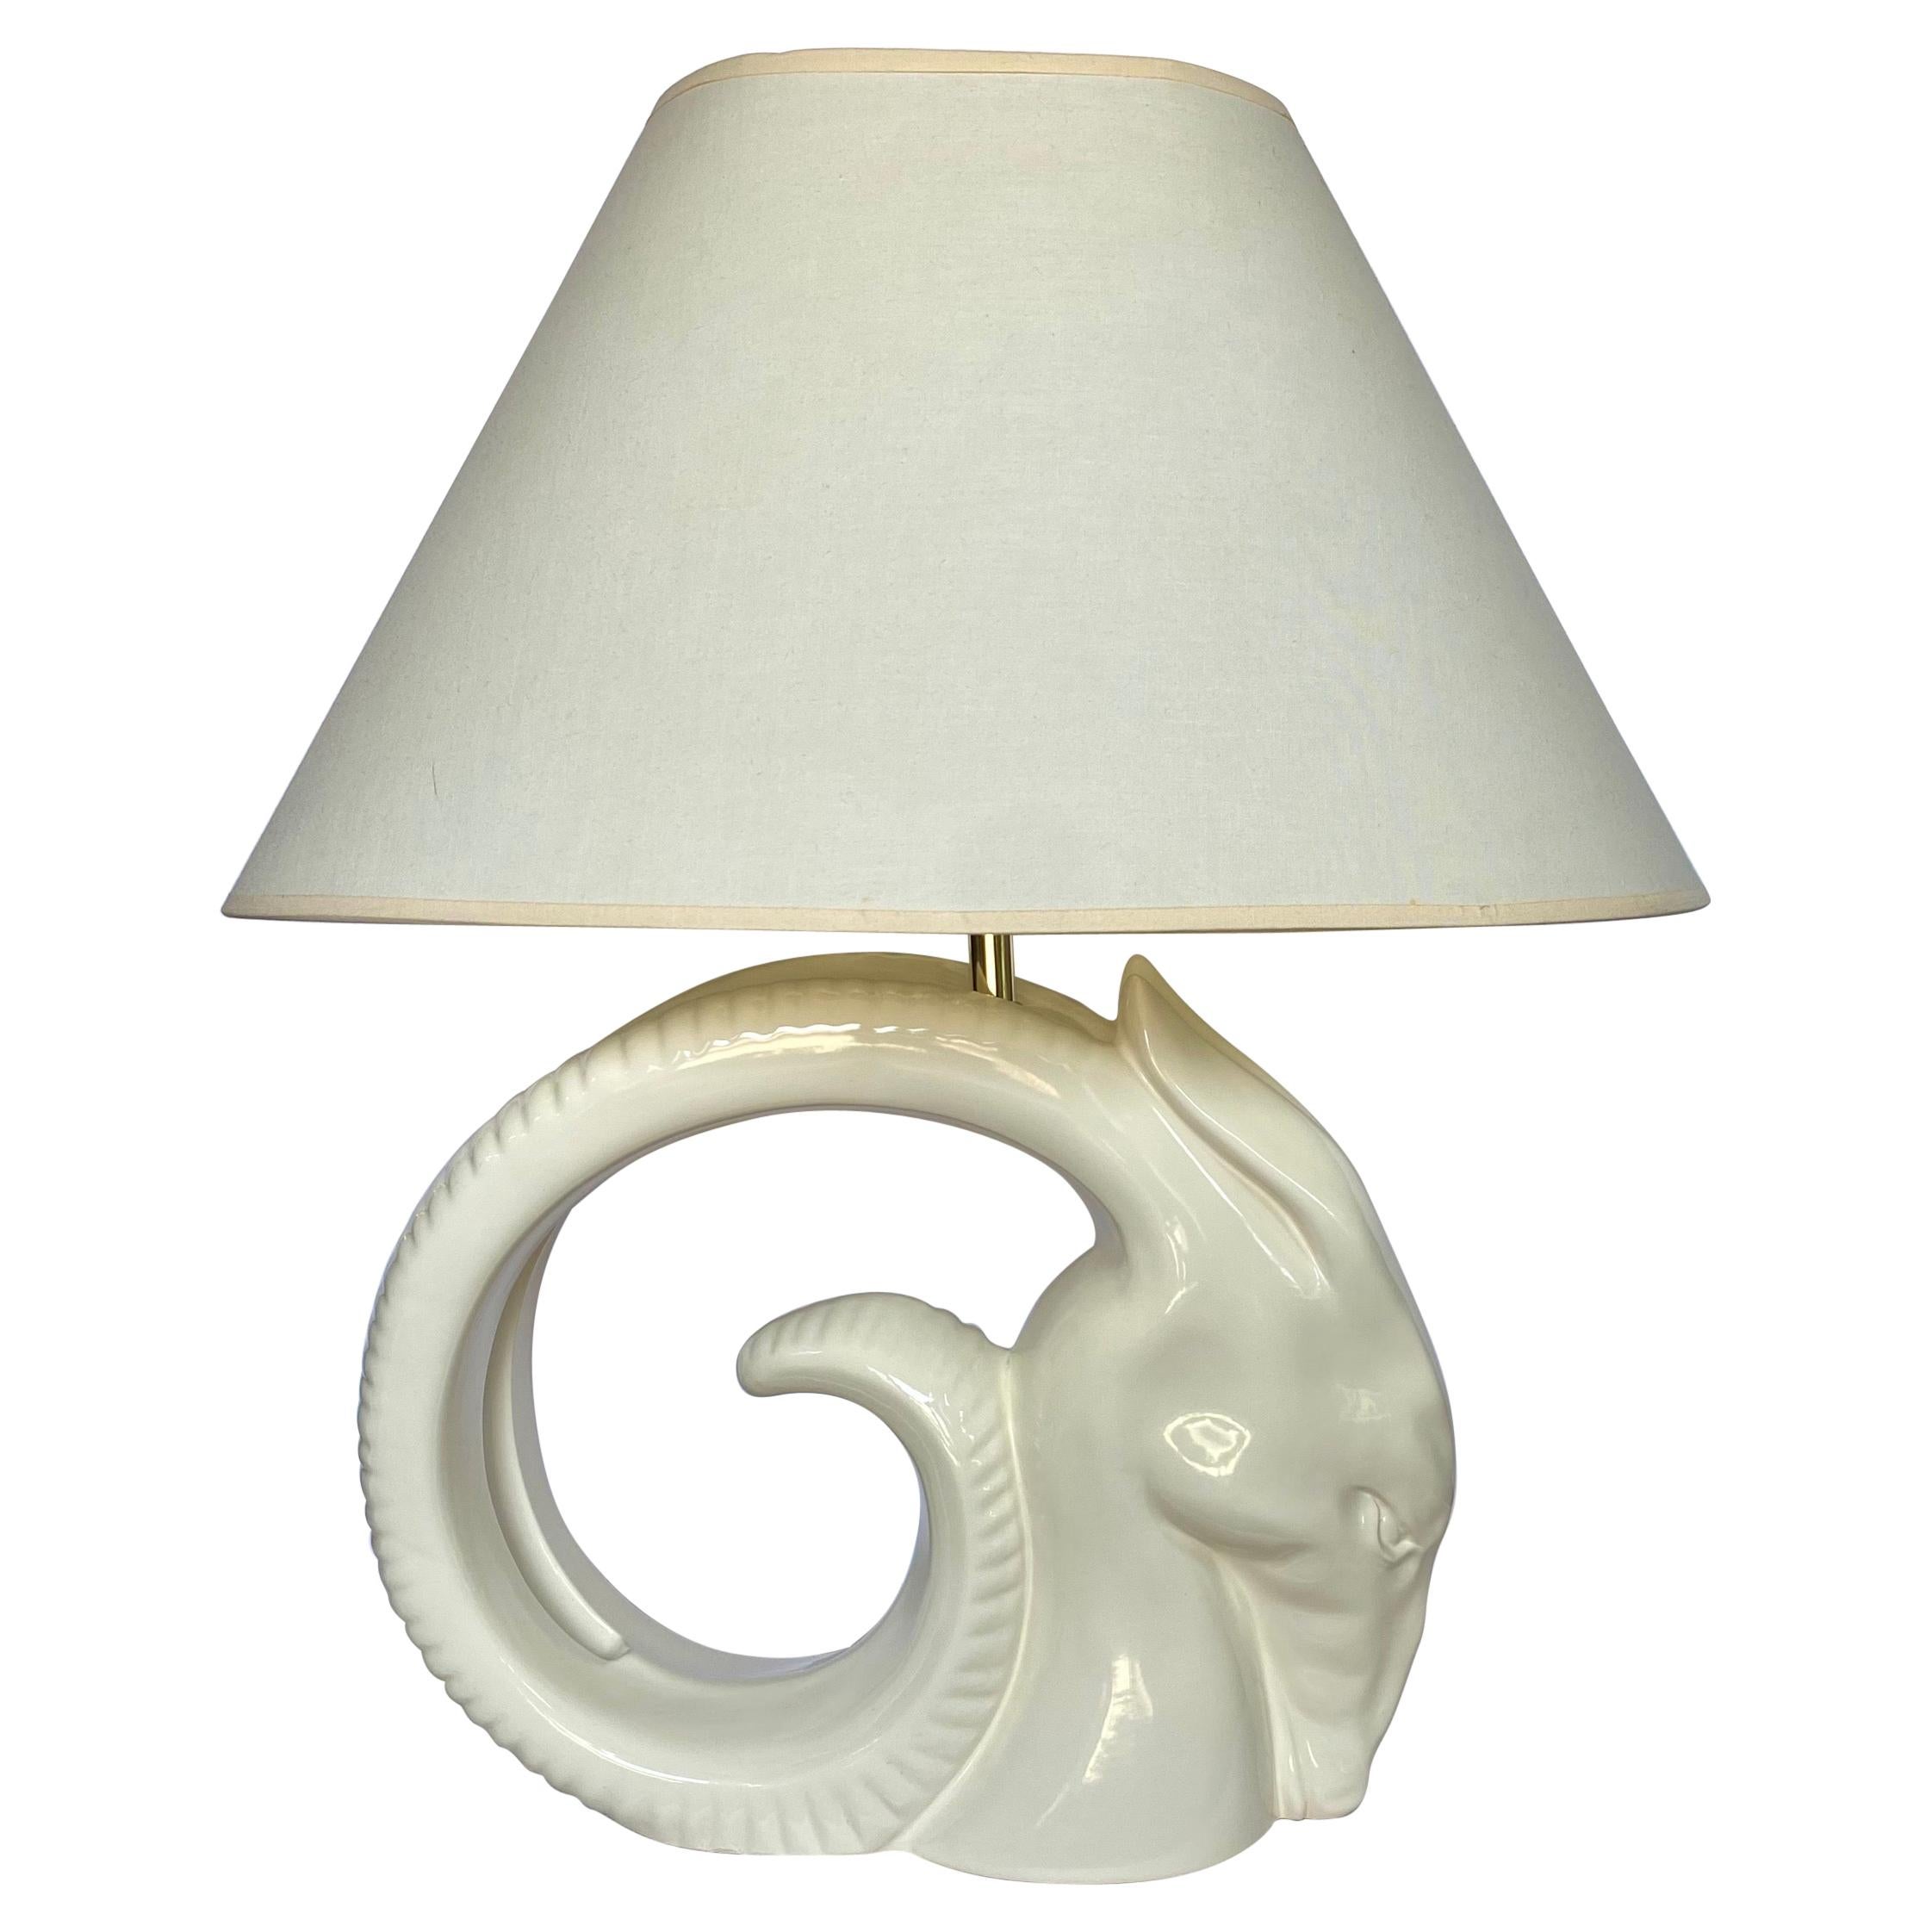 Gazelle Vintage Art Nouveau Hand Glazed Ceramic Ram Gazelle TV Lamp Light brown/ Carmel 